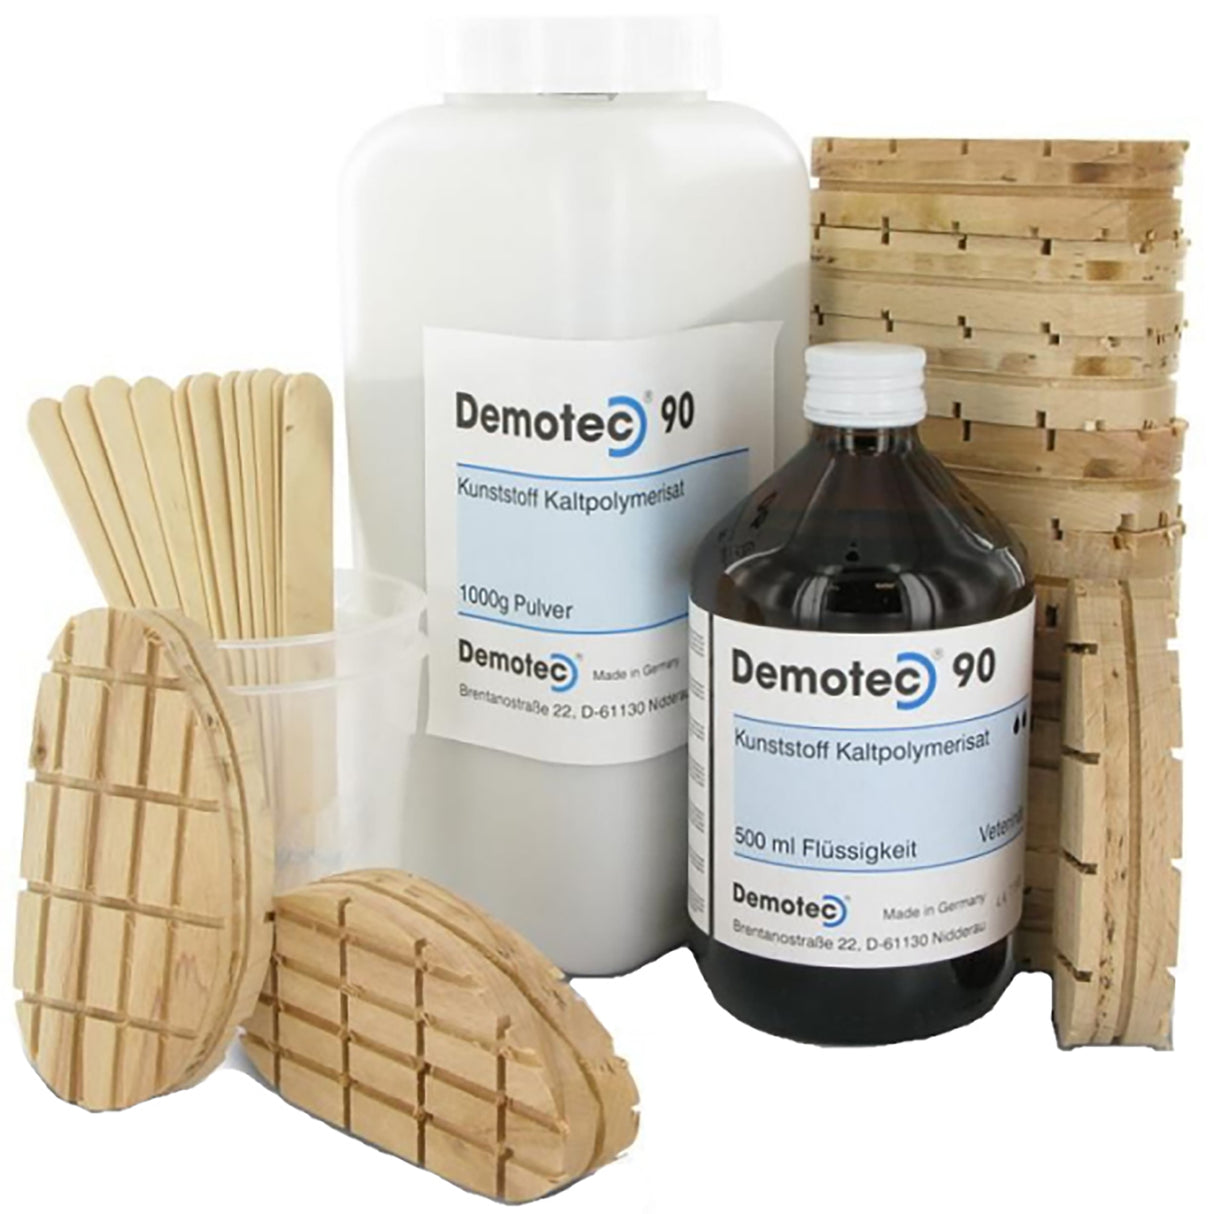 Demotec 90 - 12 Treatment set